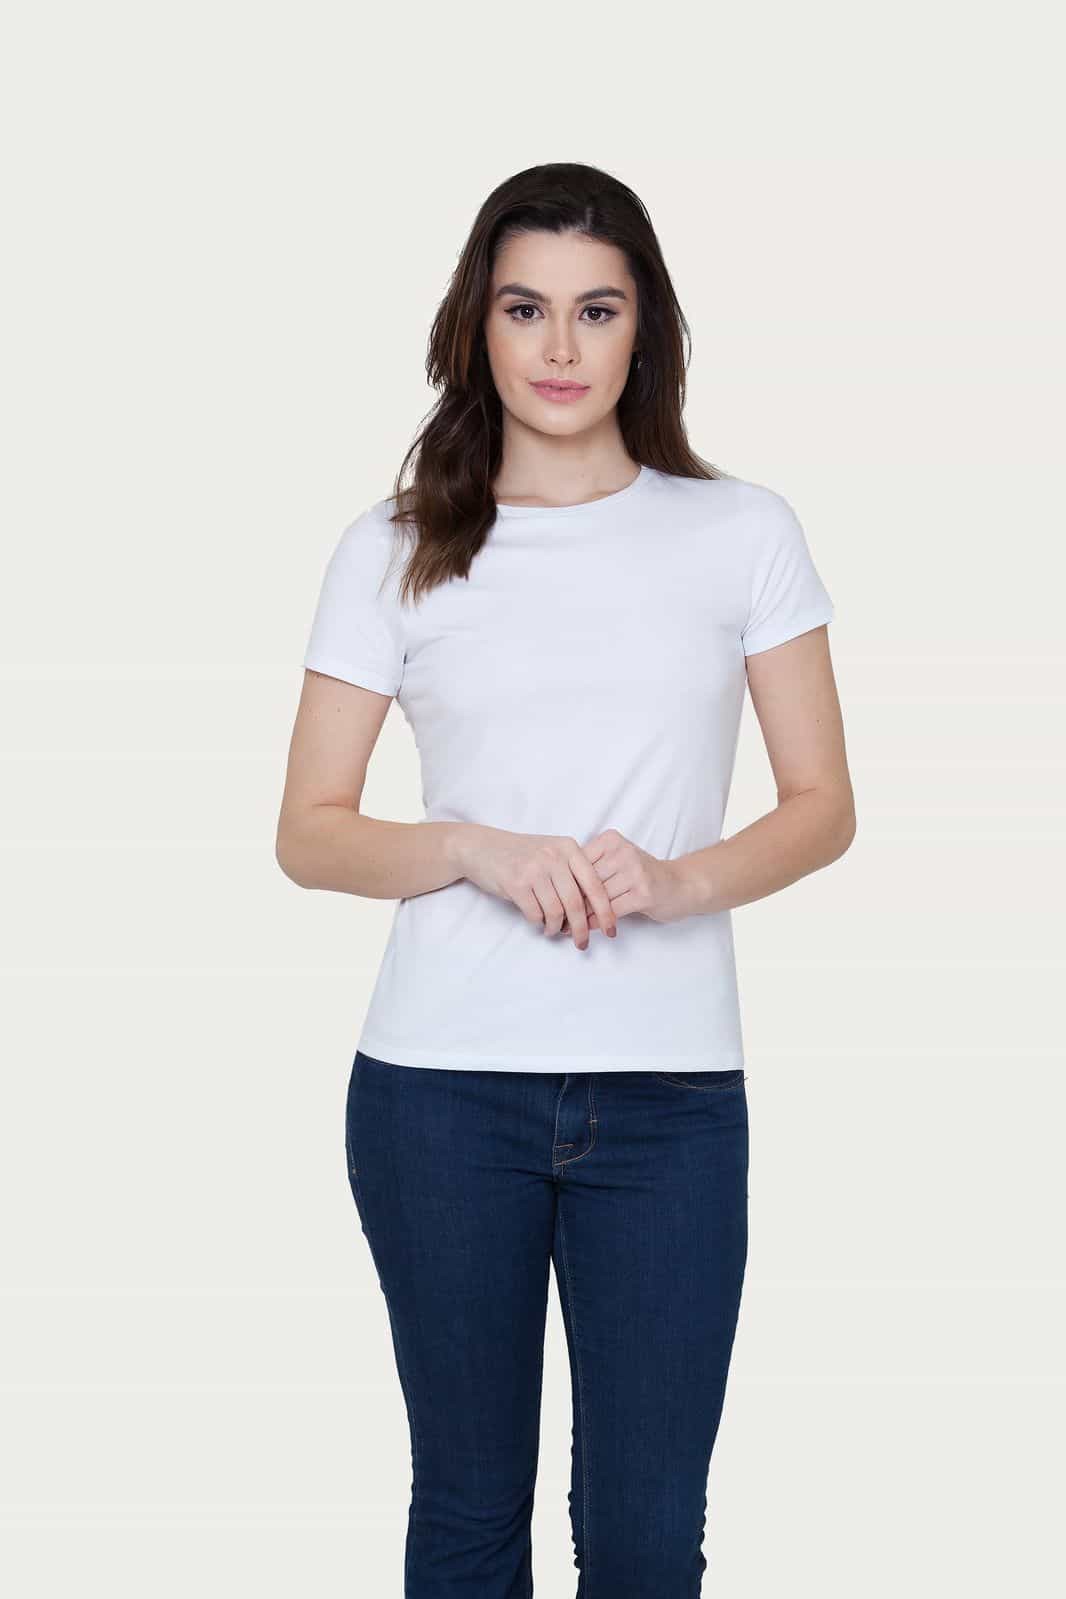 https://cdn.vnda.com.br/wshirt/2020/02/21/1700601-camiseta-feminina-basica-branca-decote-c-553.jpg?v=1582325299